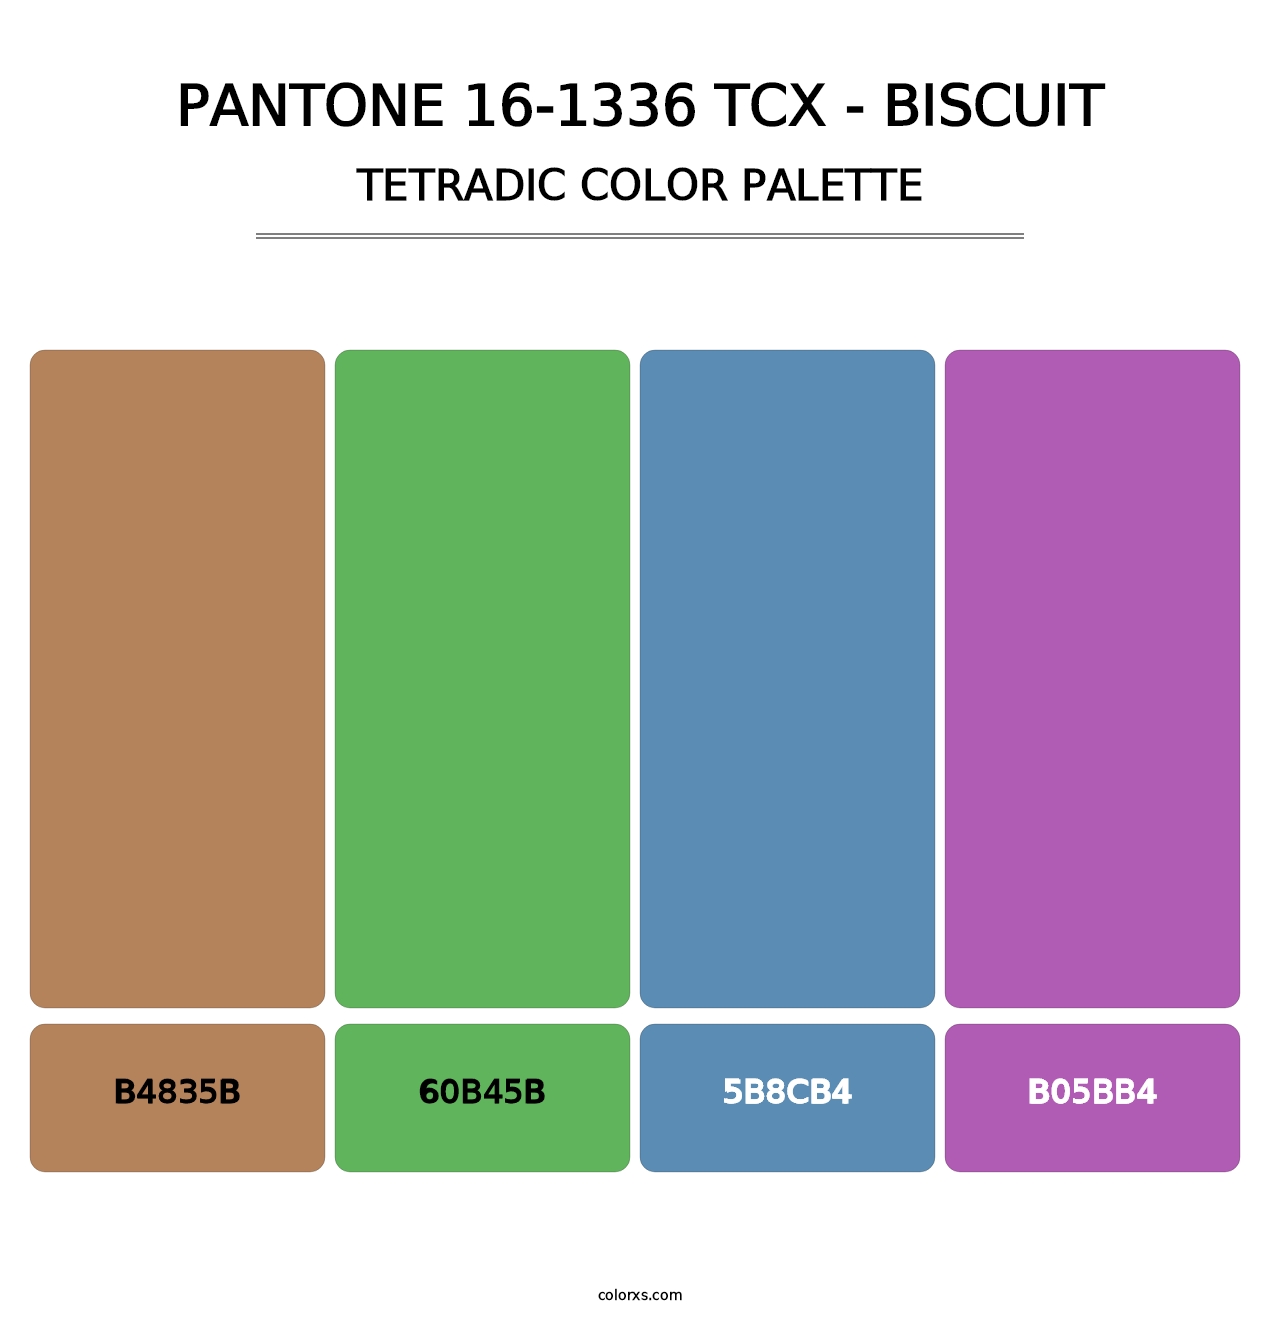 PANTONE 16-1336 TCX - Biscuit - Tetradic Color Palette